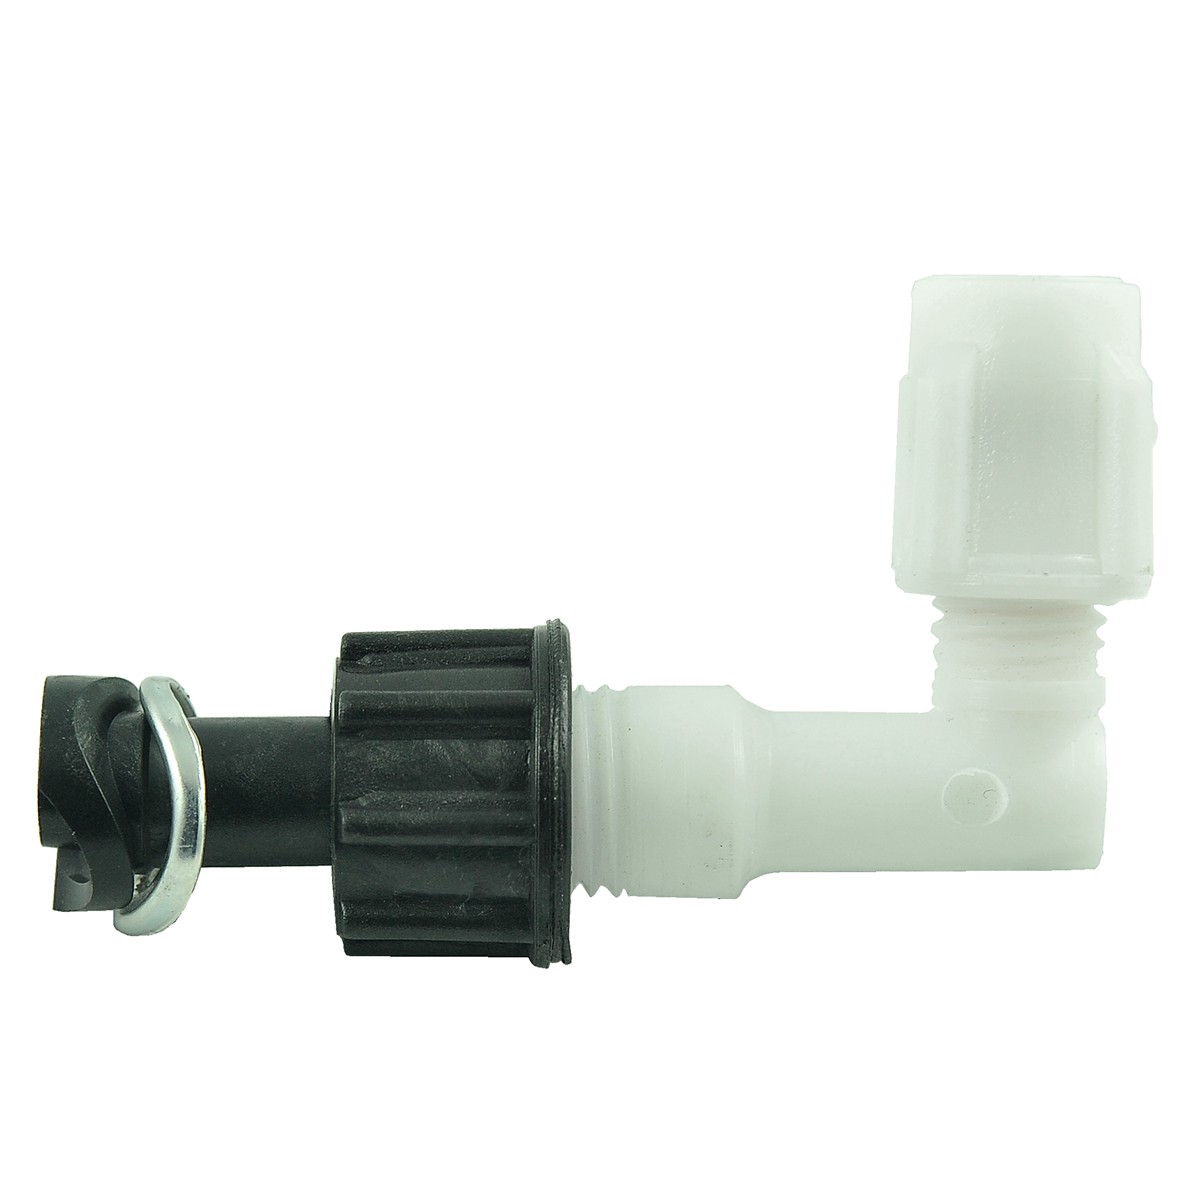 Sprayer nozzle / Tad-Len TL200S-P60/TL200S-PS60